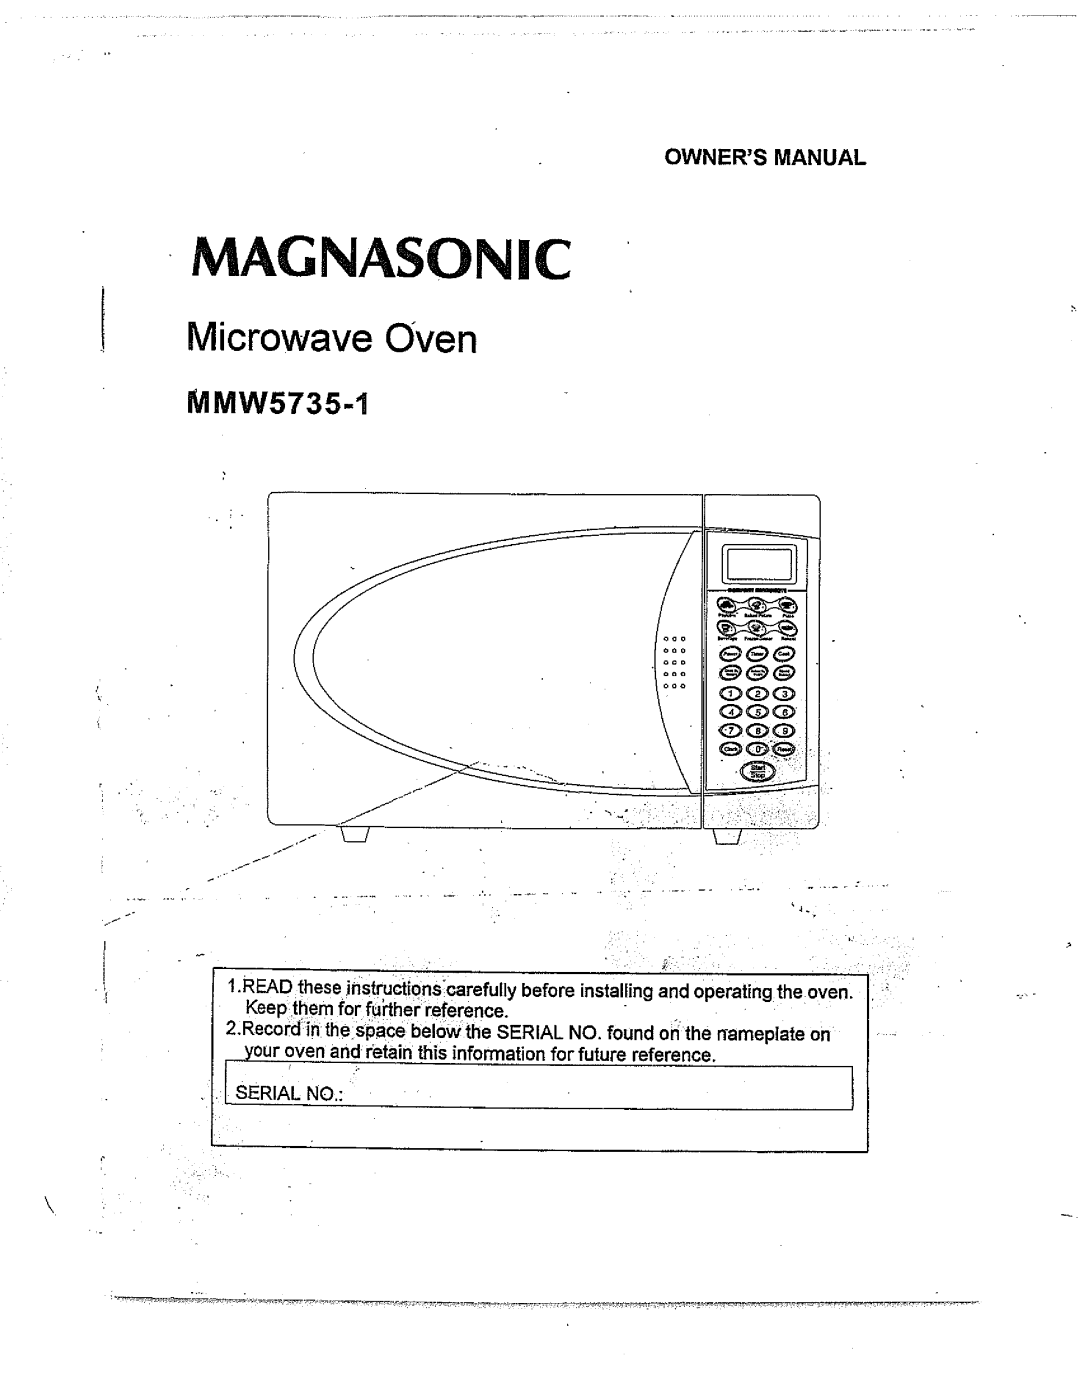 Magnasonic MMW5735-1 manual 